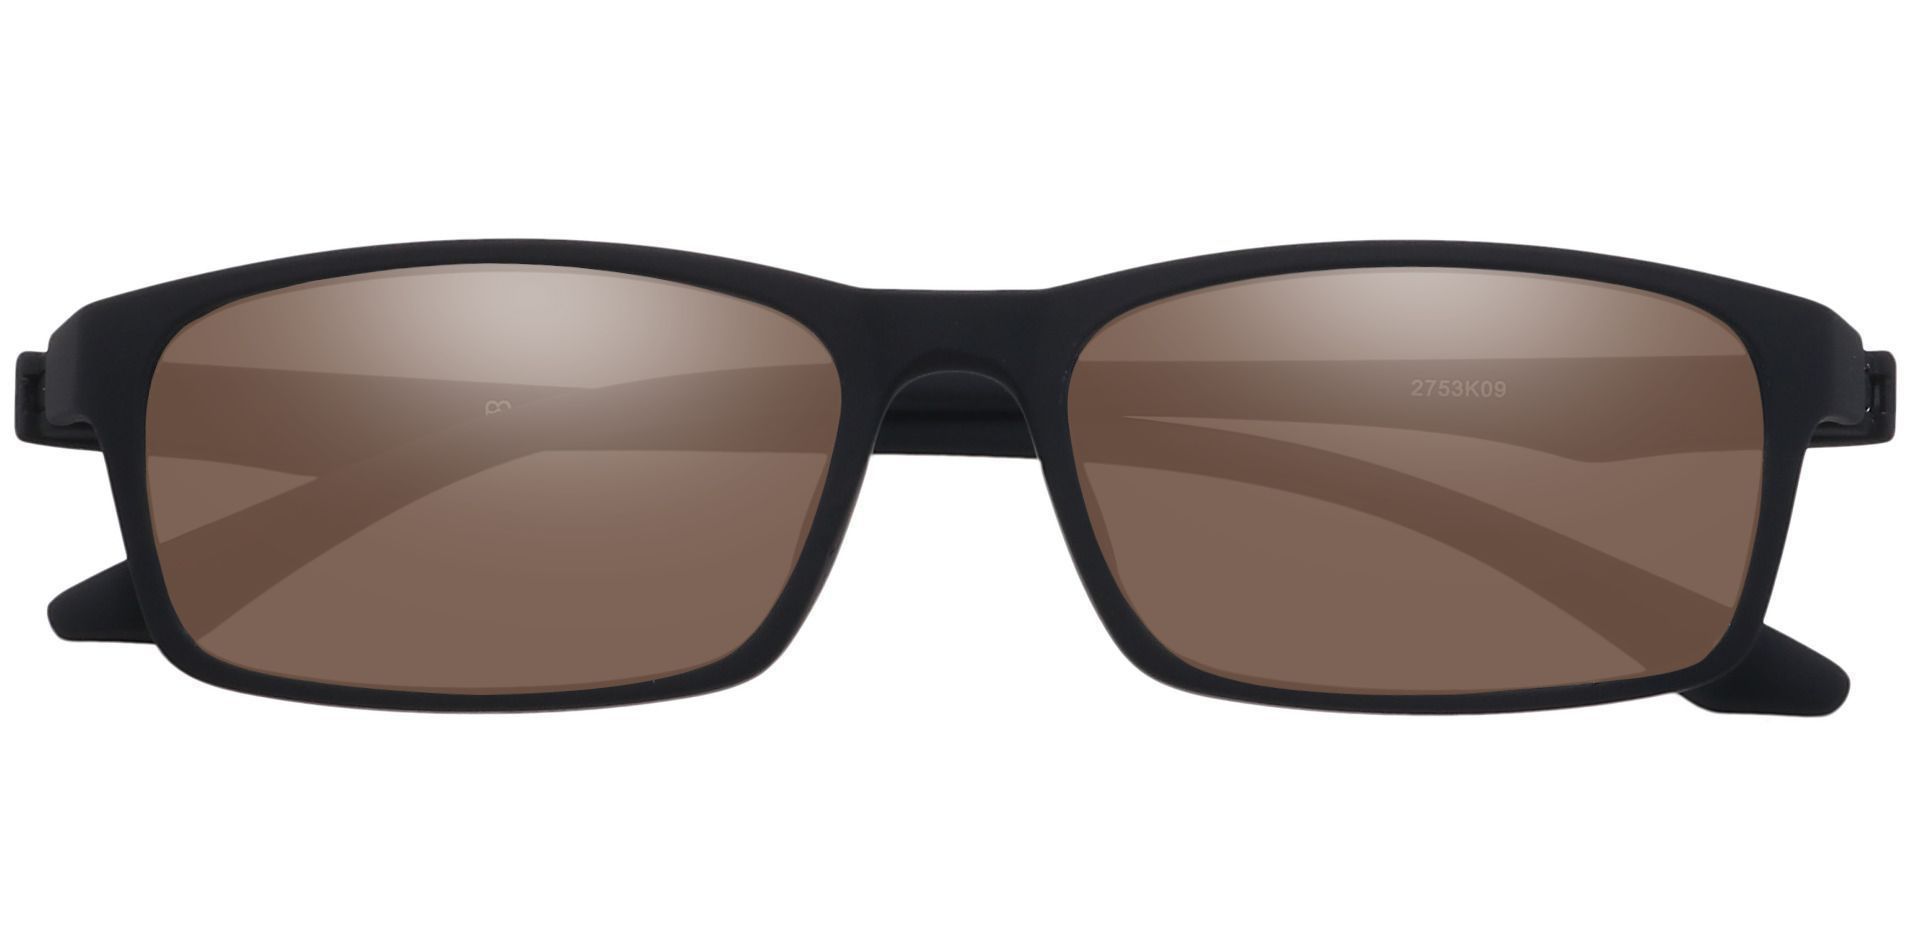 Poplar Rectangle Lined Bifocal Sunglasses - Black Frame With Brown Lenses